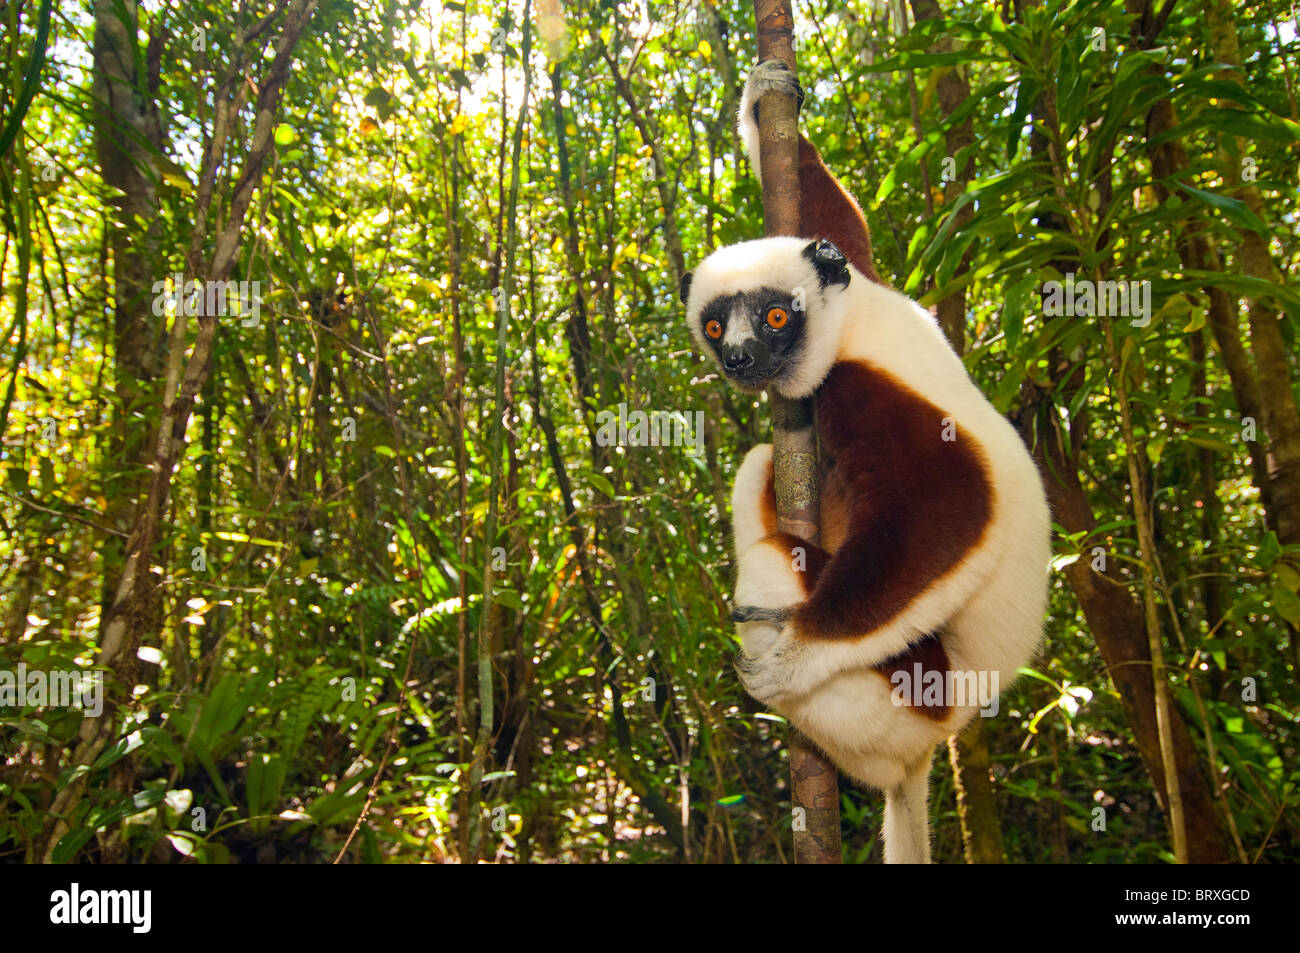 Lemur Tierwelt Sifaka Propithecus Verreauxi Cocquereli Madagaskar Madagaskar Lemuren wilden Wald Regenwald Baum prosimian Stockfoto